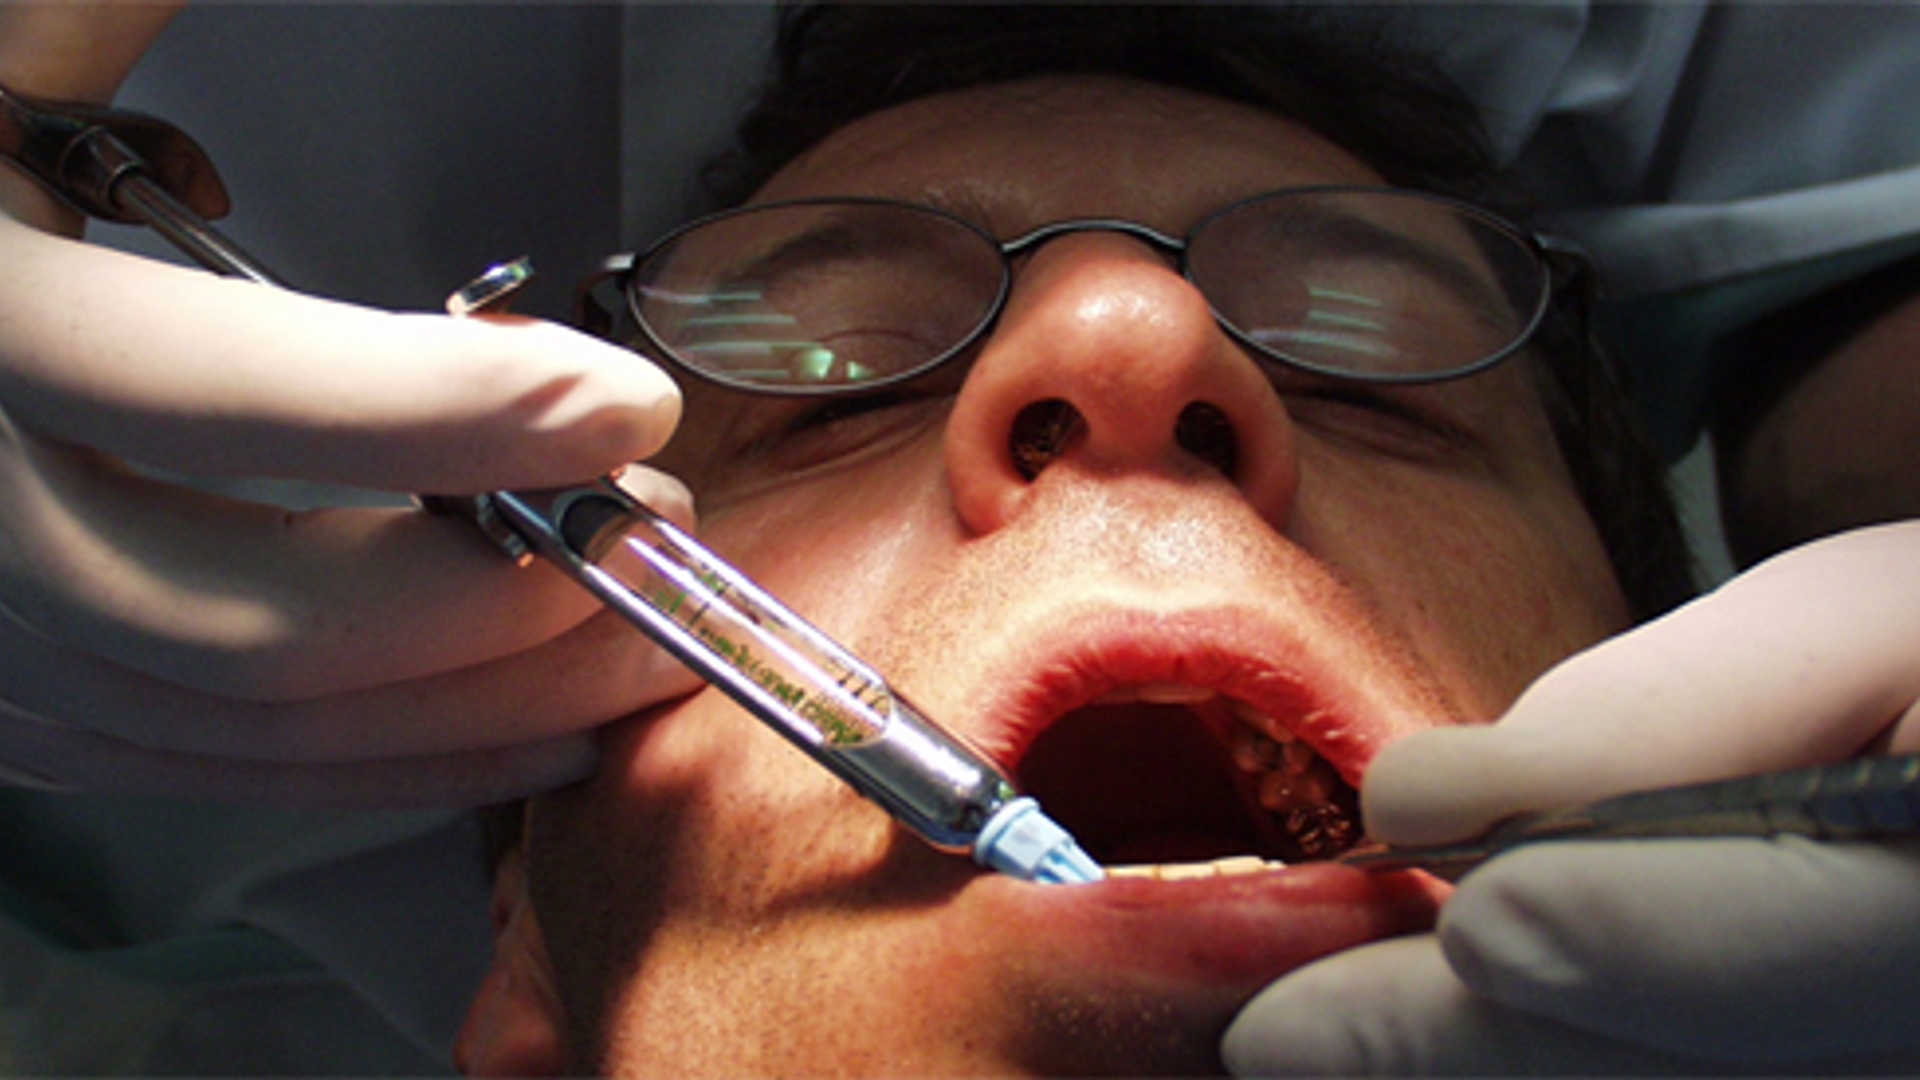 tandartsbehandeling2_01.jpg